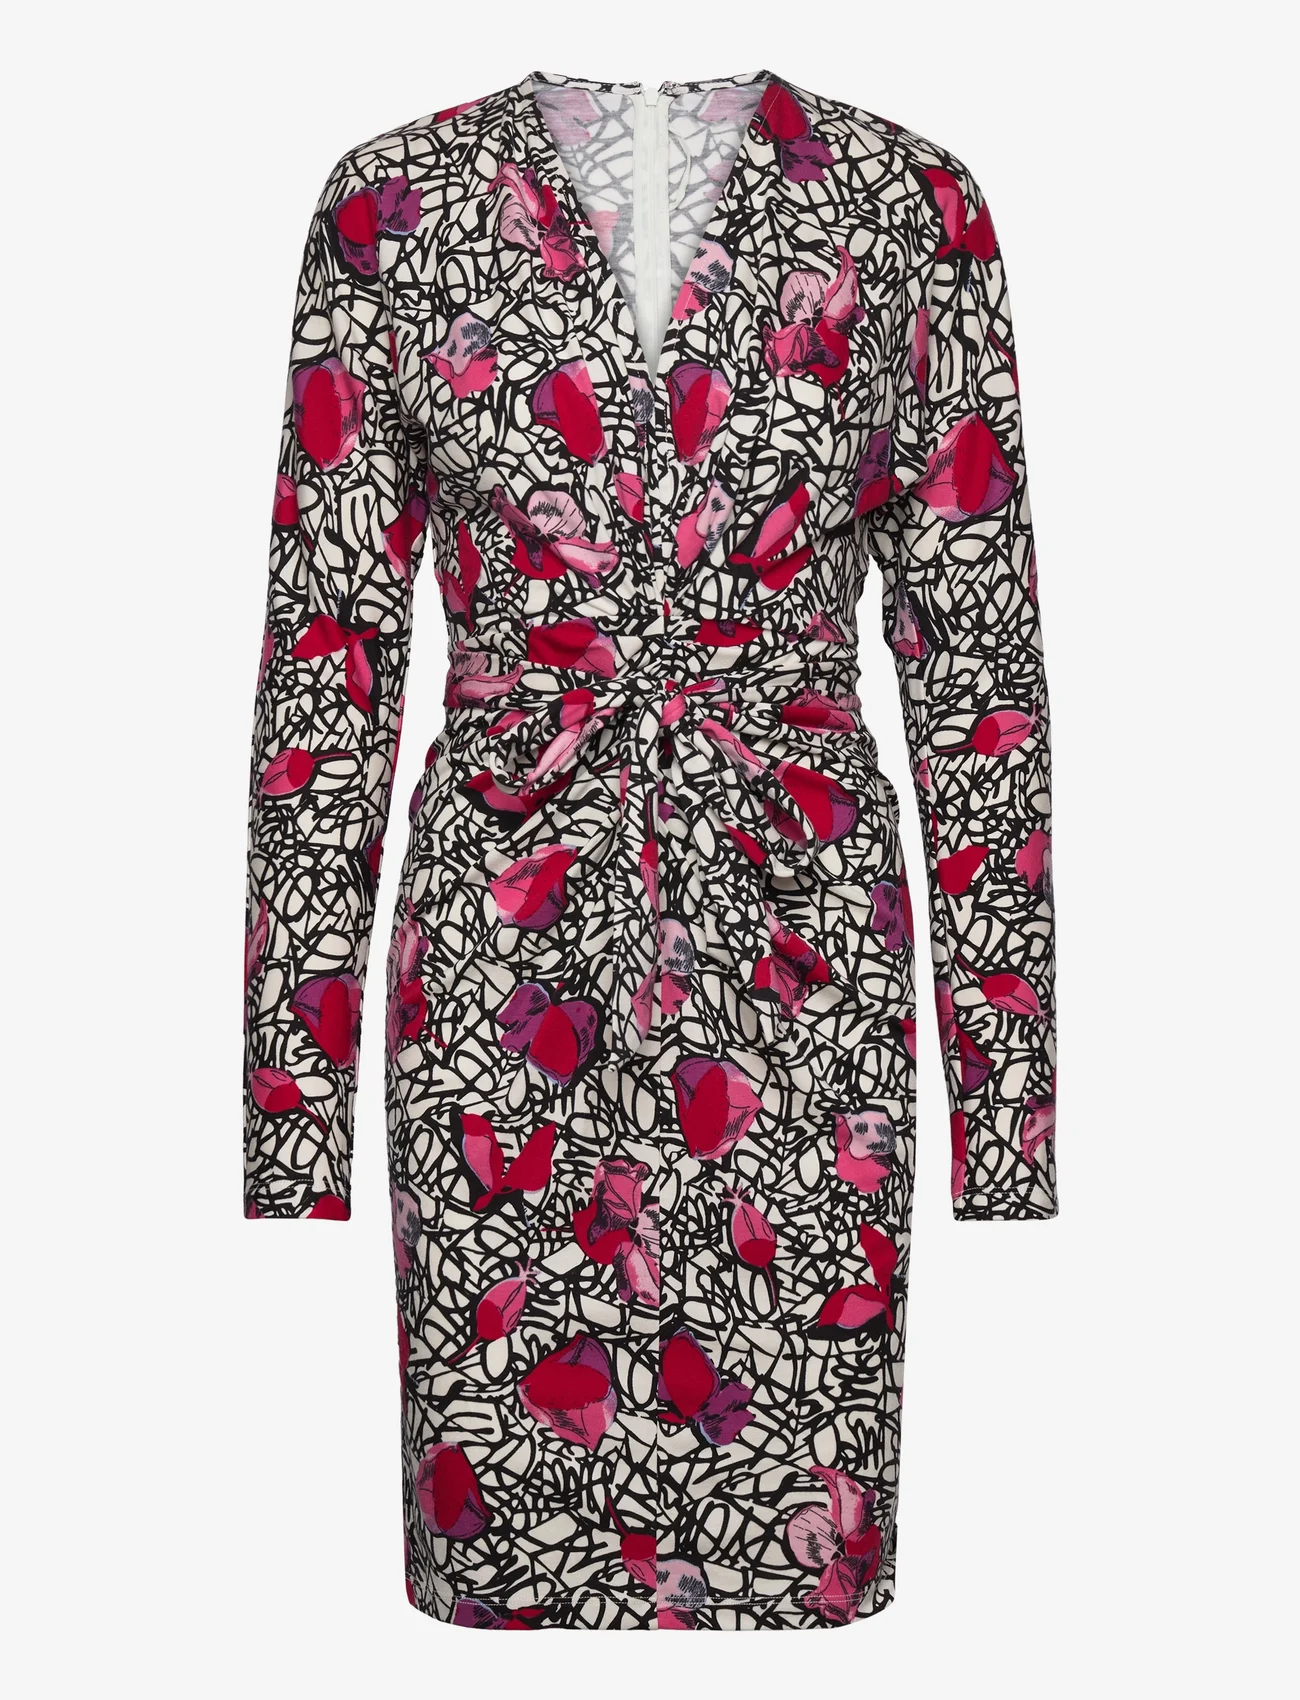 Diane von Furstenberg - DVF NEW MILEY DRESS - midi kjoler - signature floral s - 1